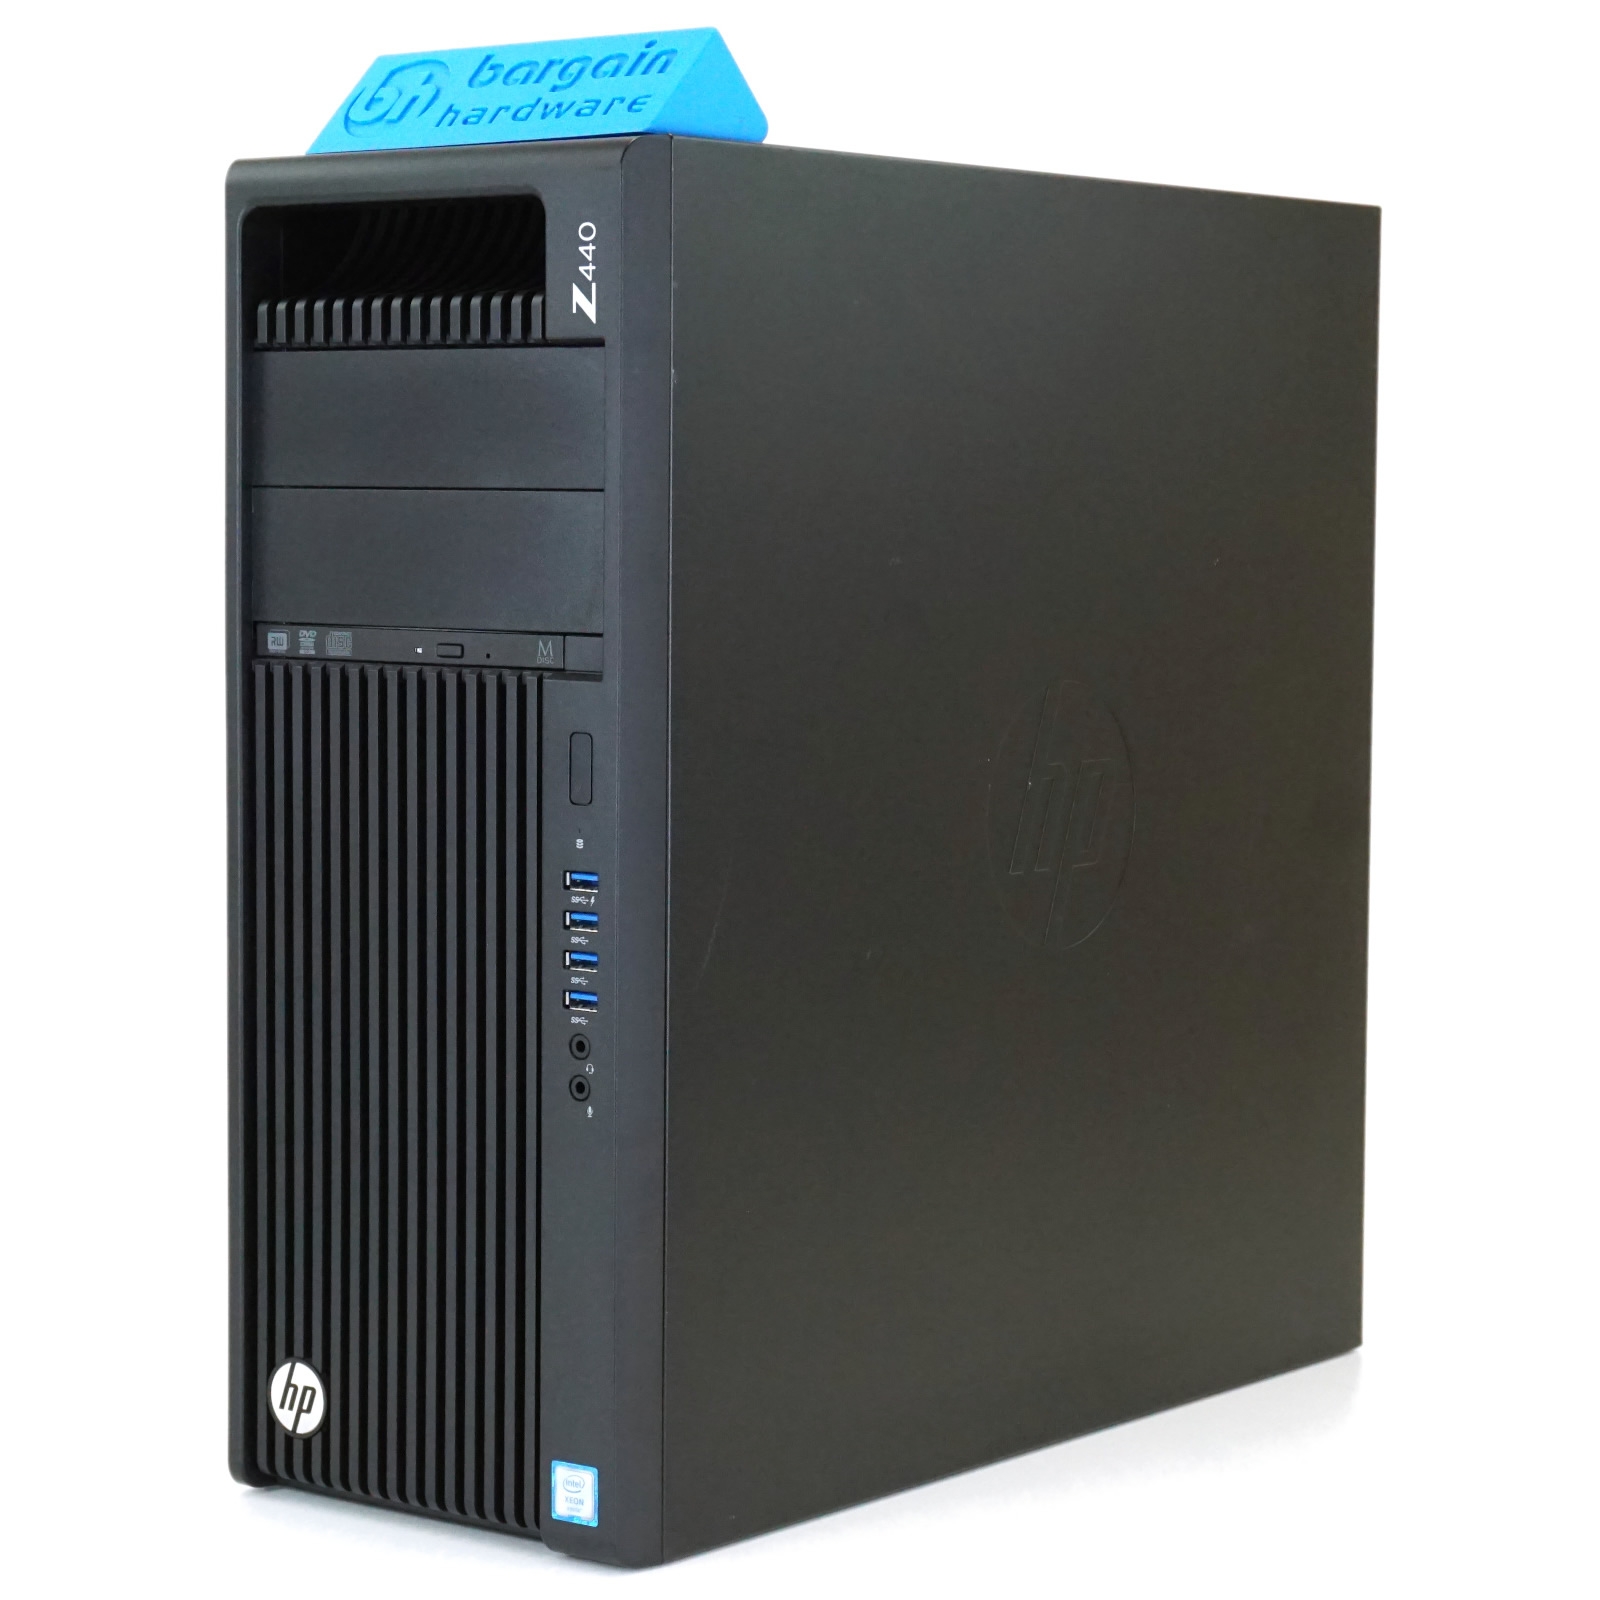 HP Z440 Workstation: Intel Xeon E5-2699 V4 22-core, 64GB DDR4 RAM, Barebones PC